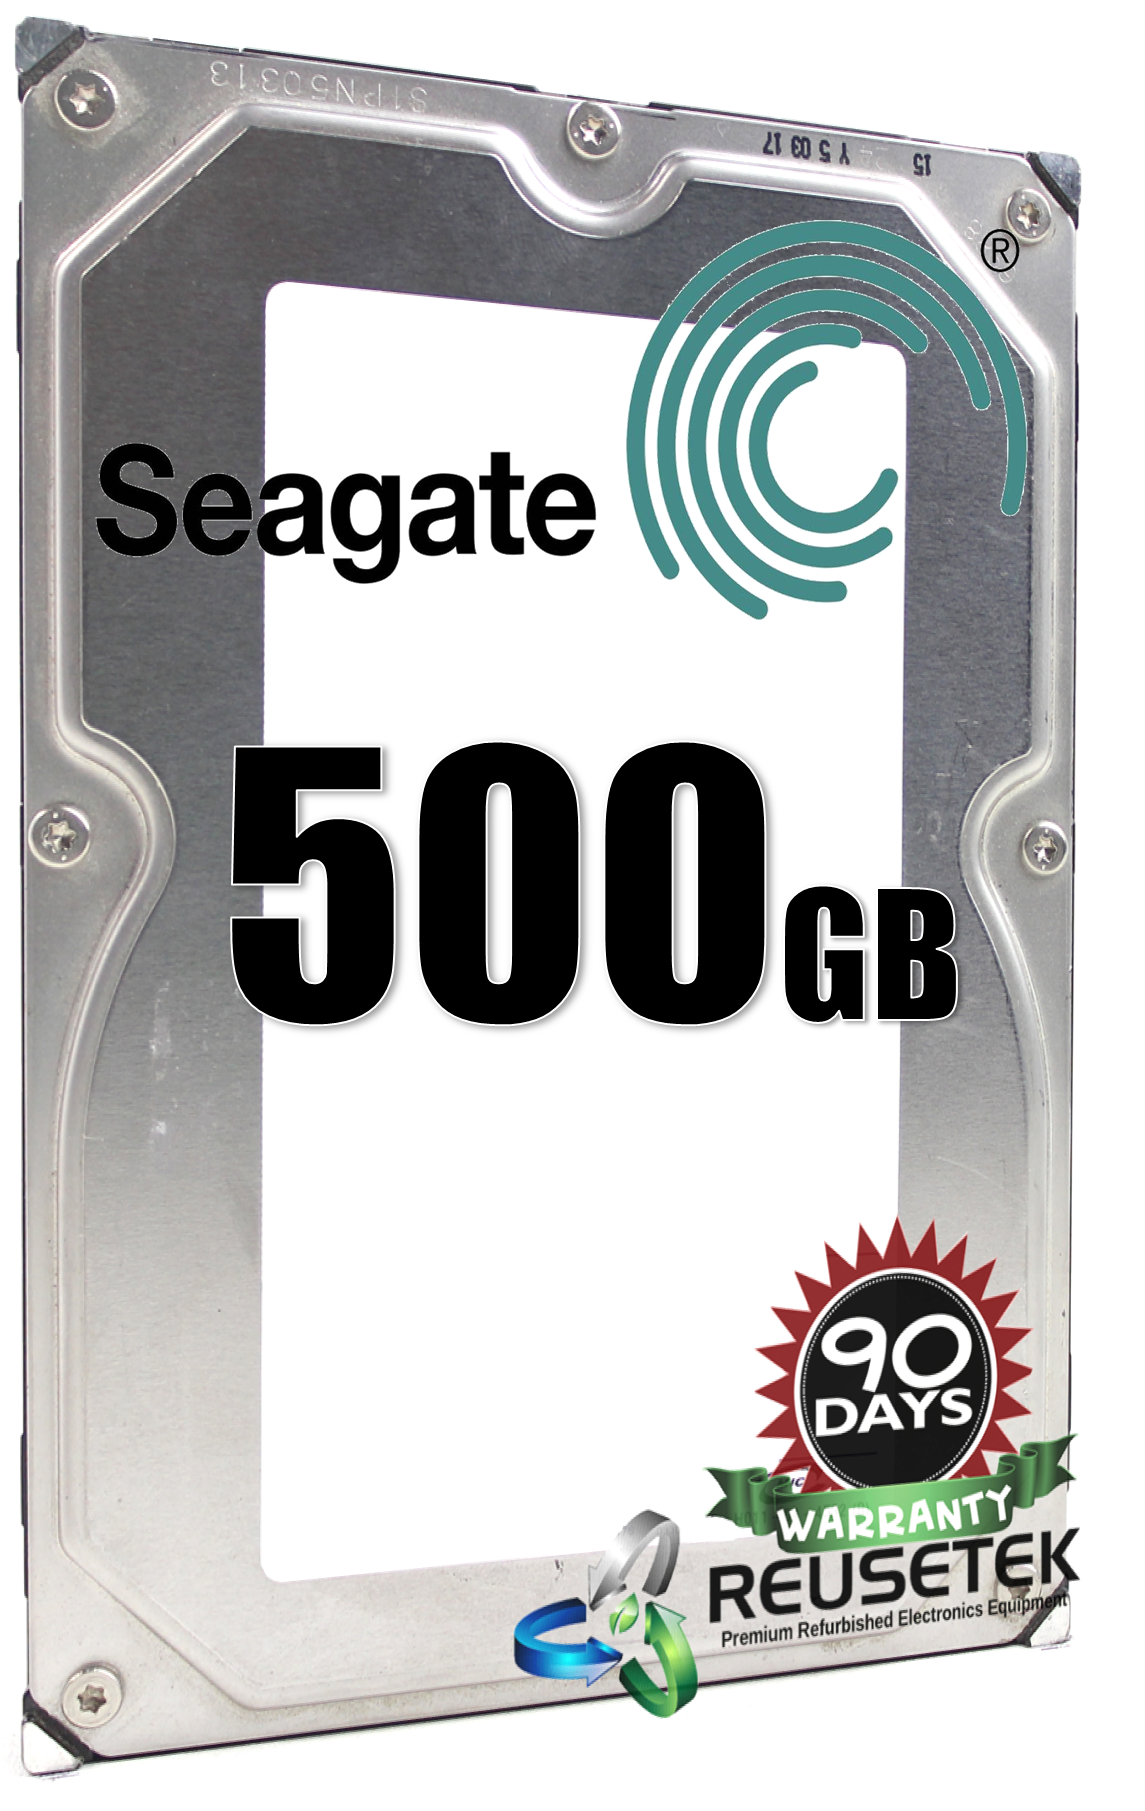 50002508-Seagate Barracuda ST3500312CS 500GB 5400 RPM 3.5" Sata Hard Drive-image